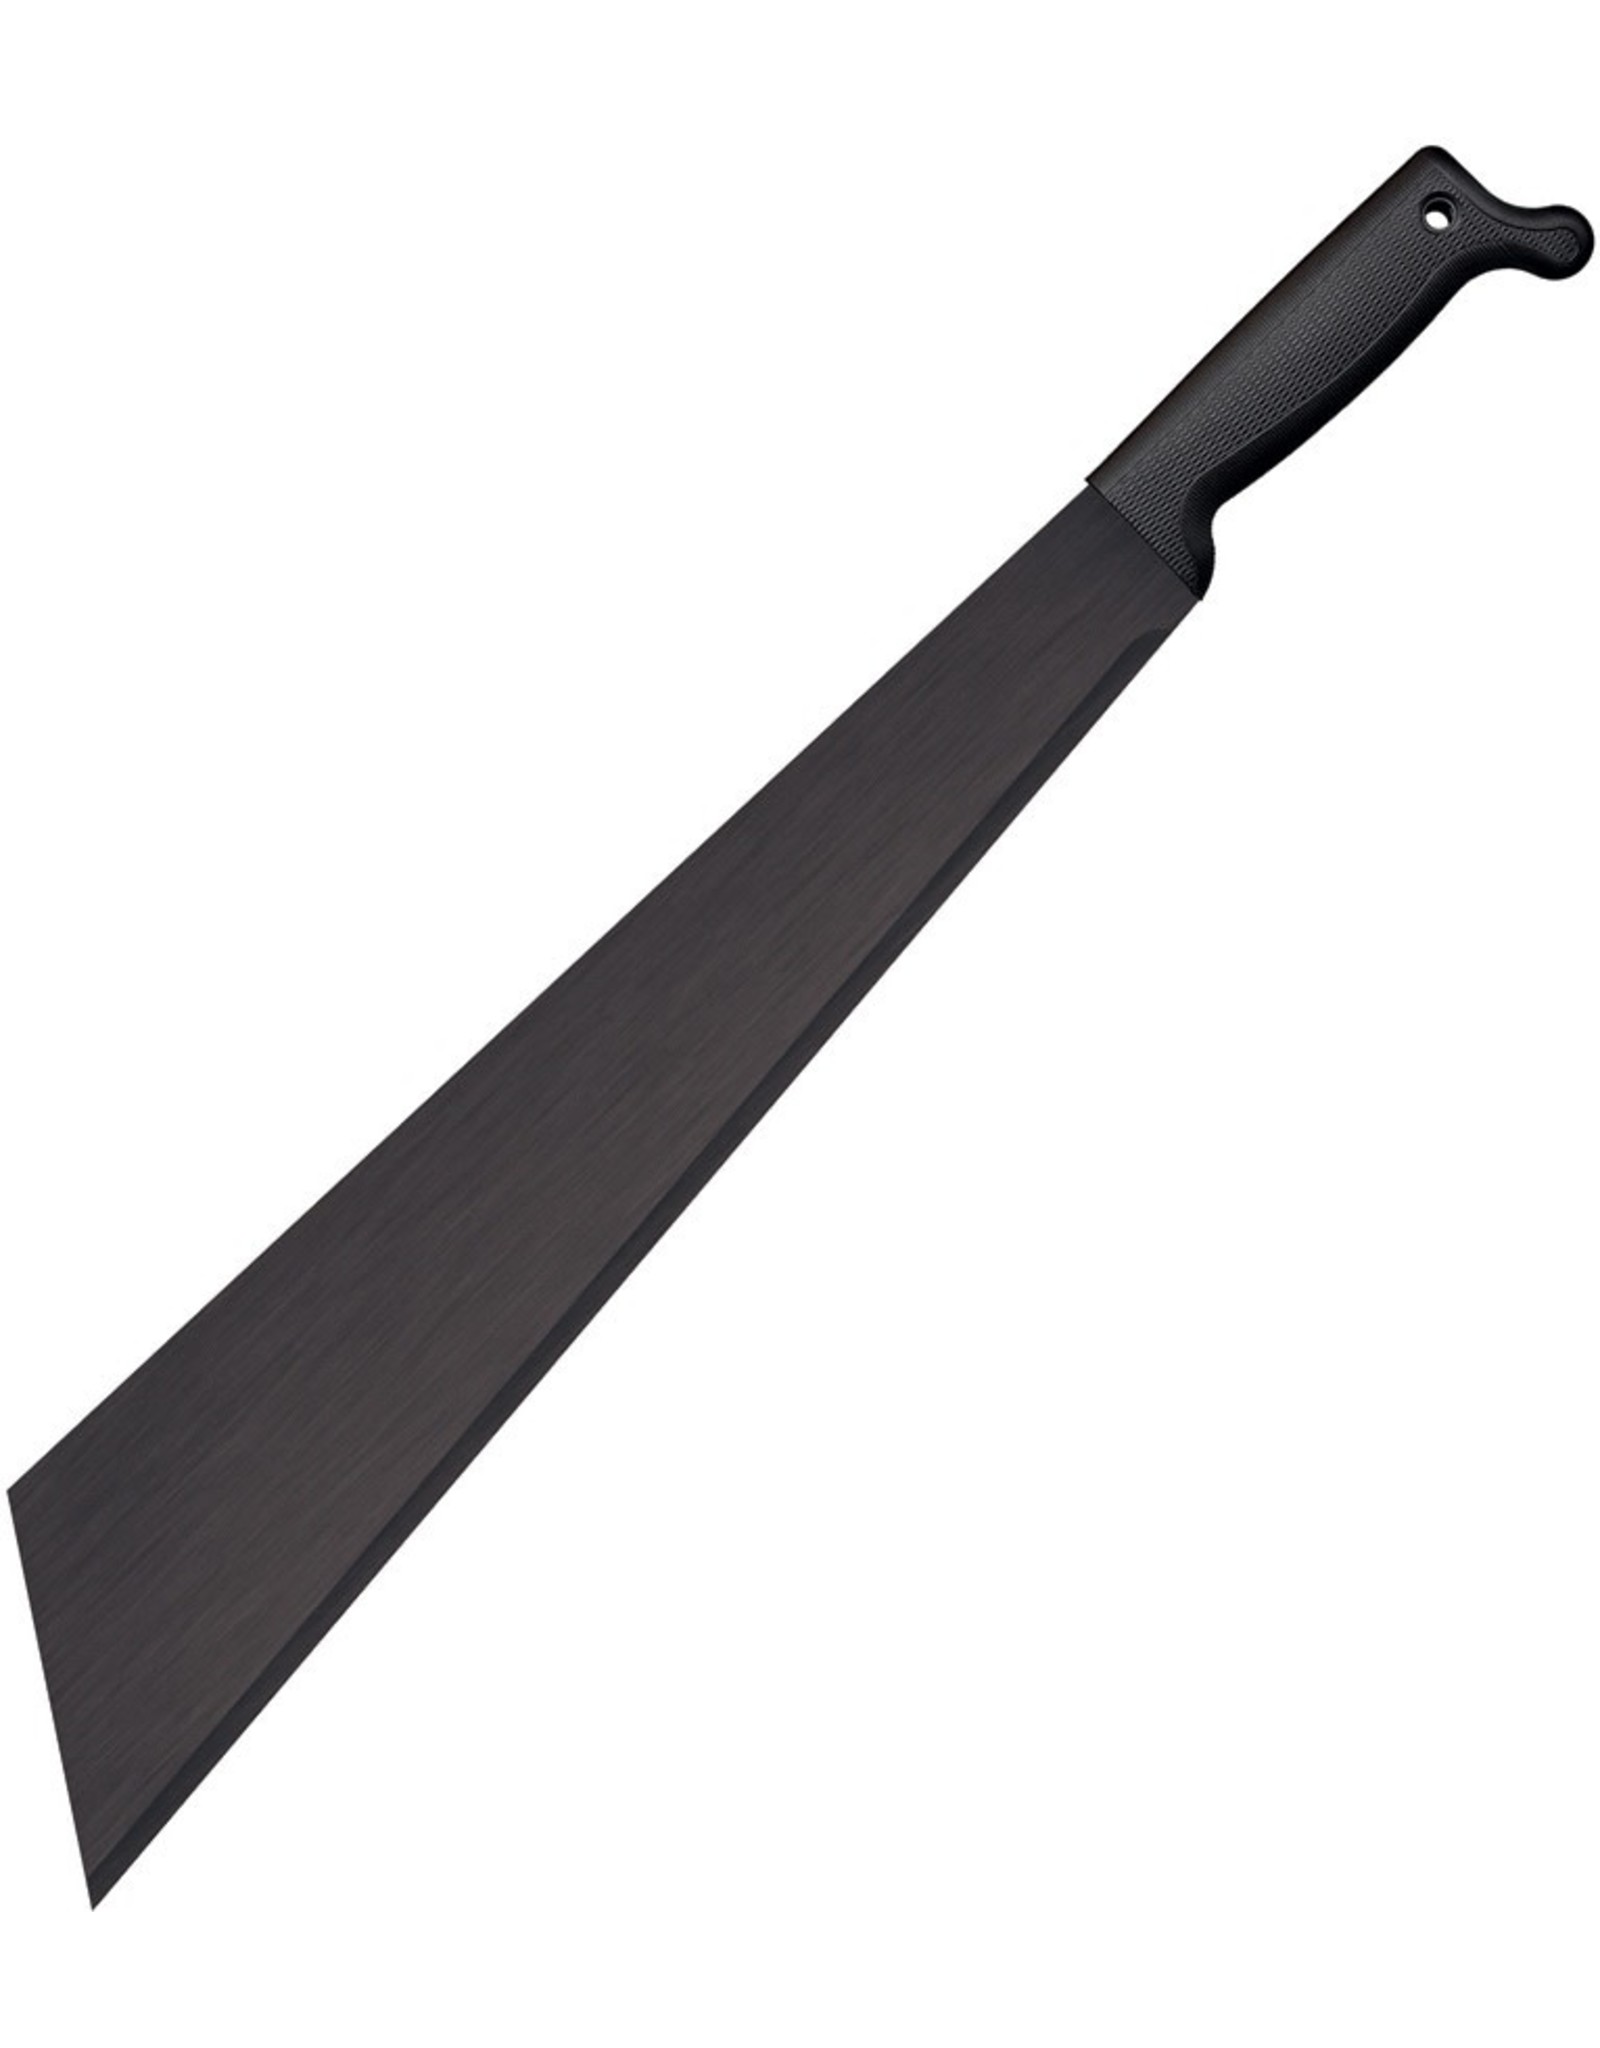 Cold Steel Cold Steel 97ST18S Slant Tip Machete 18" Blade, Polypropylene Handle, Cor-Ex Sheath